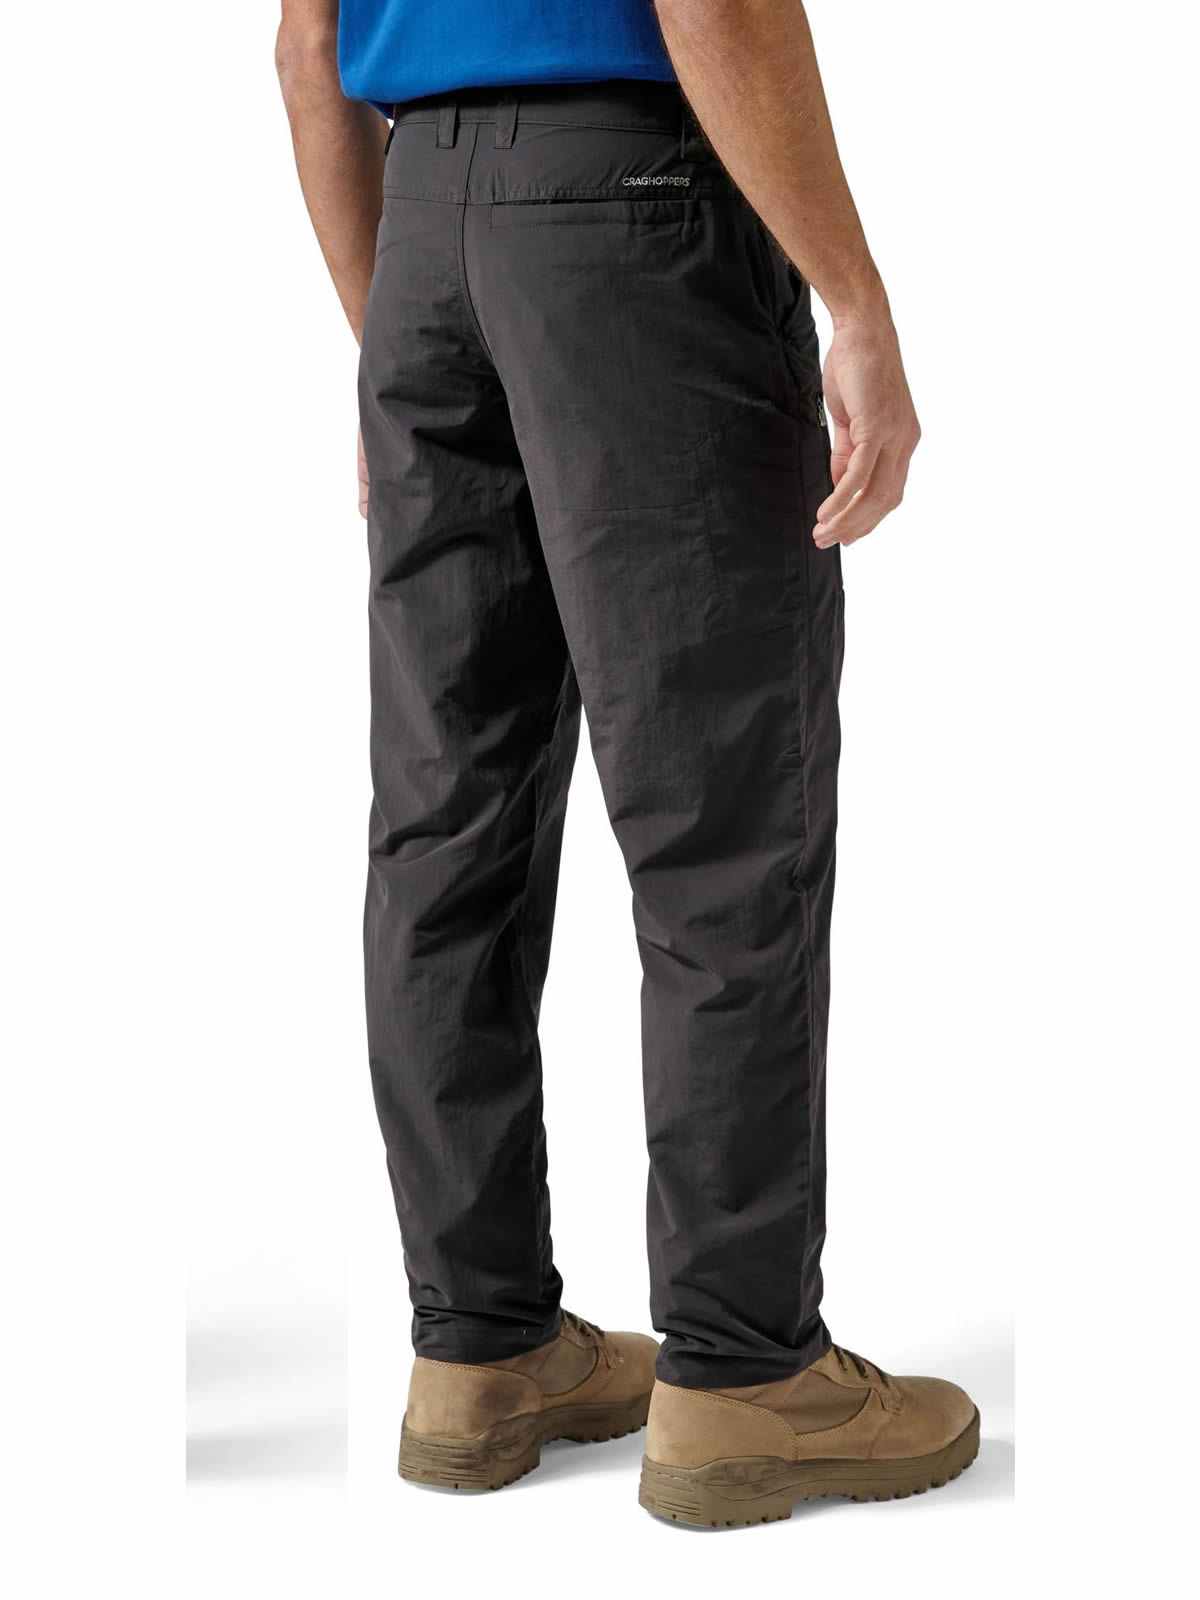 Craghoppers Mens Kiwi Pro II Smart Dry Walking Trousers Casual Hiking Pant   eBay